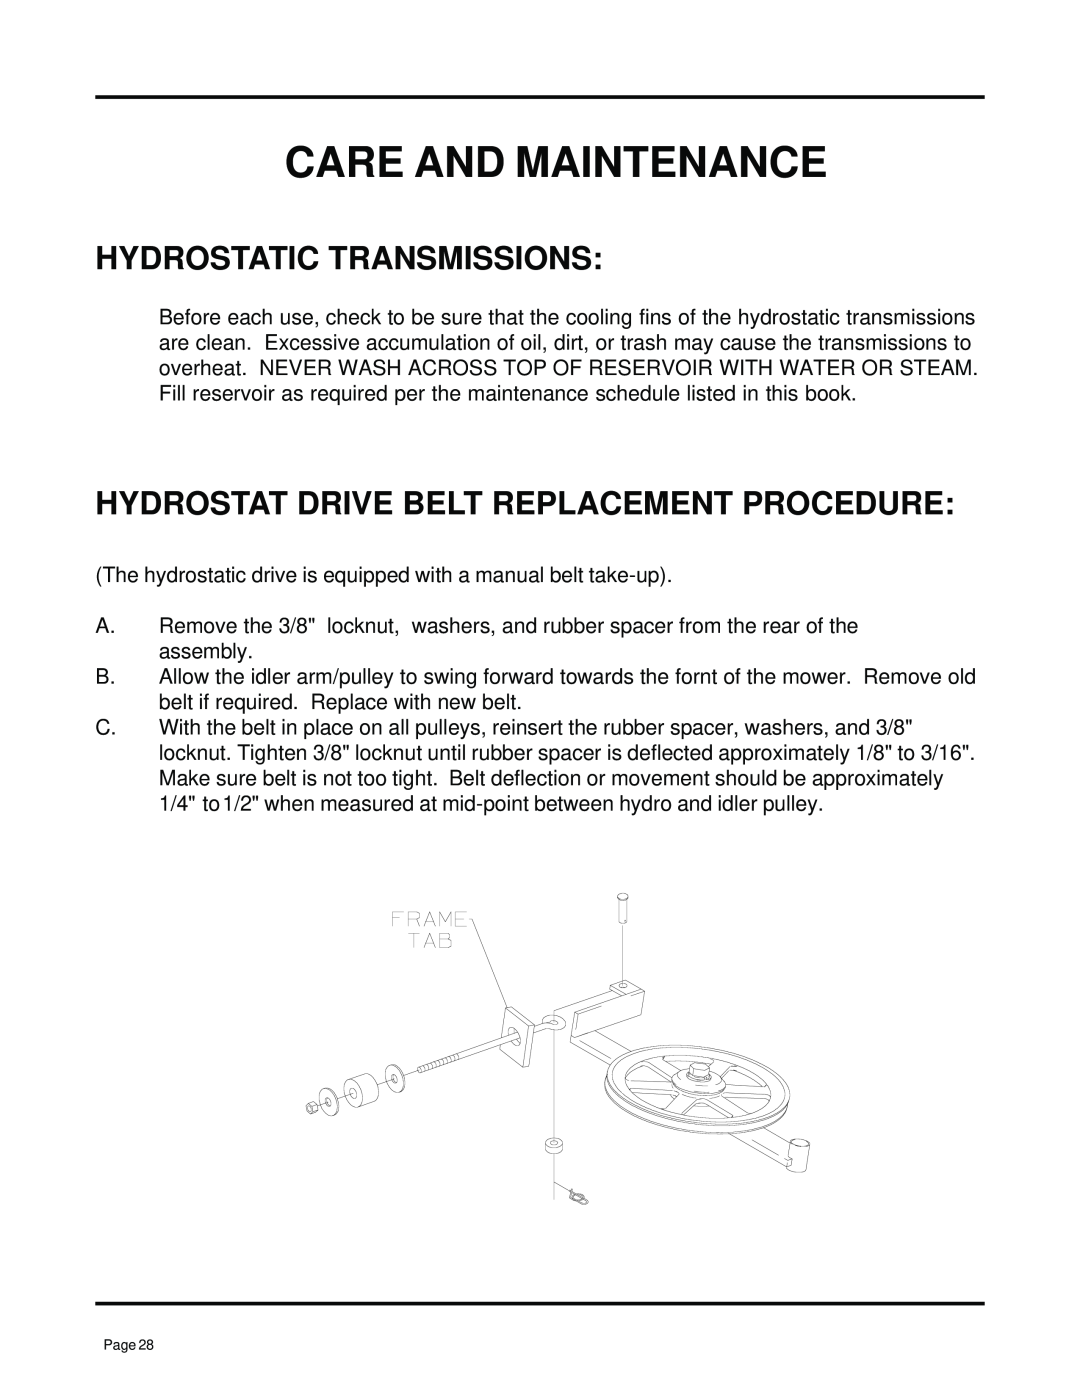 Dixon ZTR 7025, 13091-0500 Hydrostatic Transmissions, Hydrostat Drive Belt Replacement Procedure, Care And Maintenance 